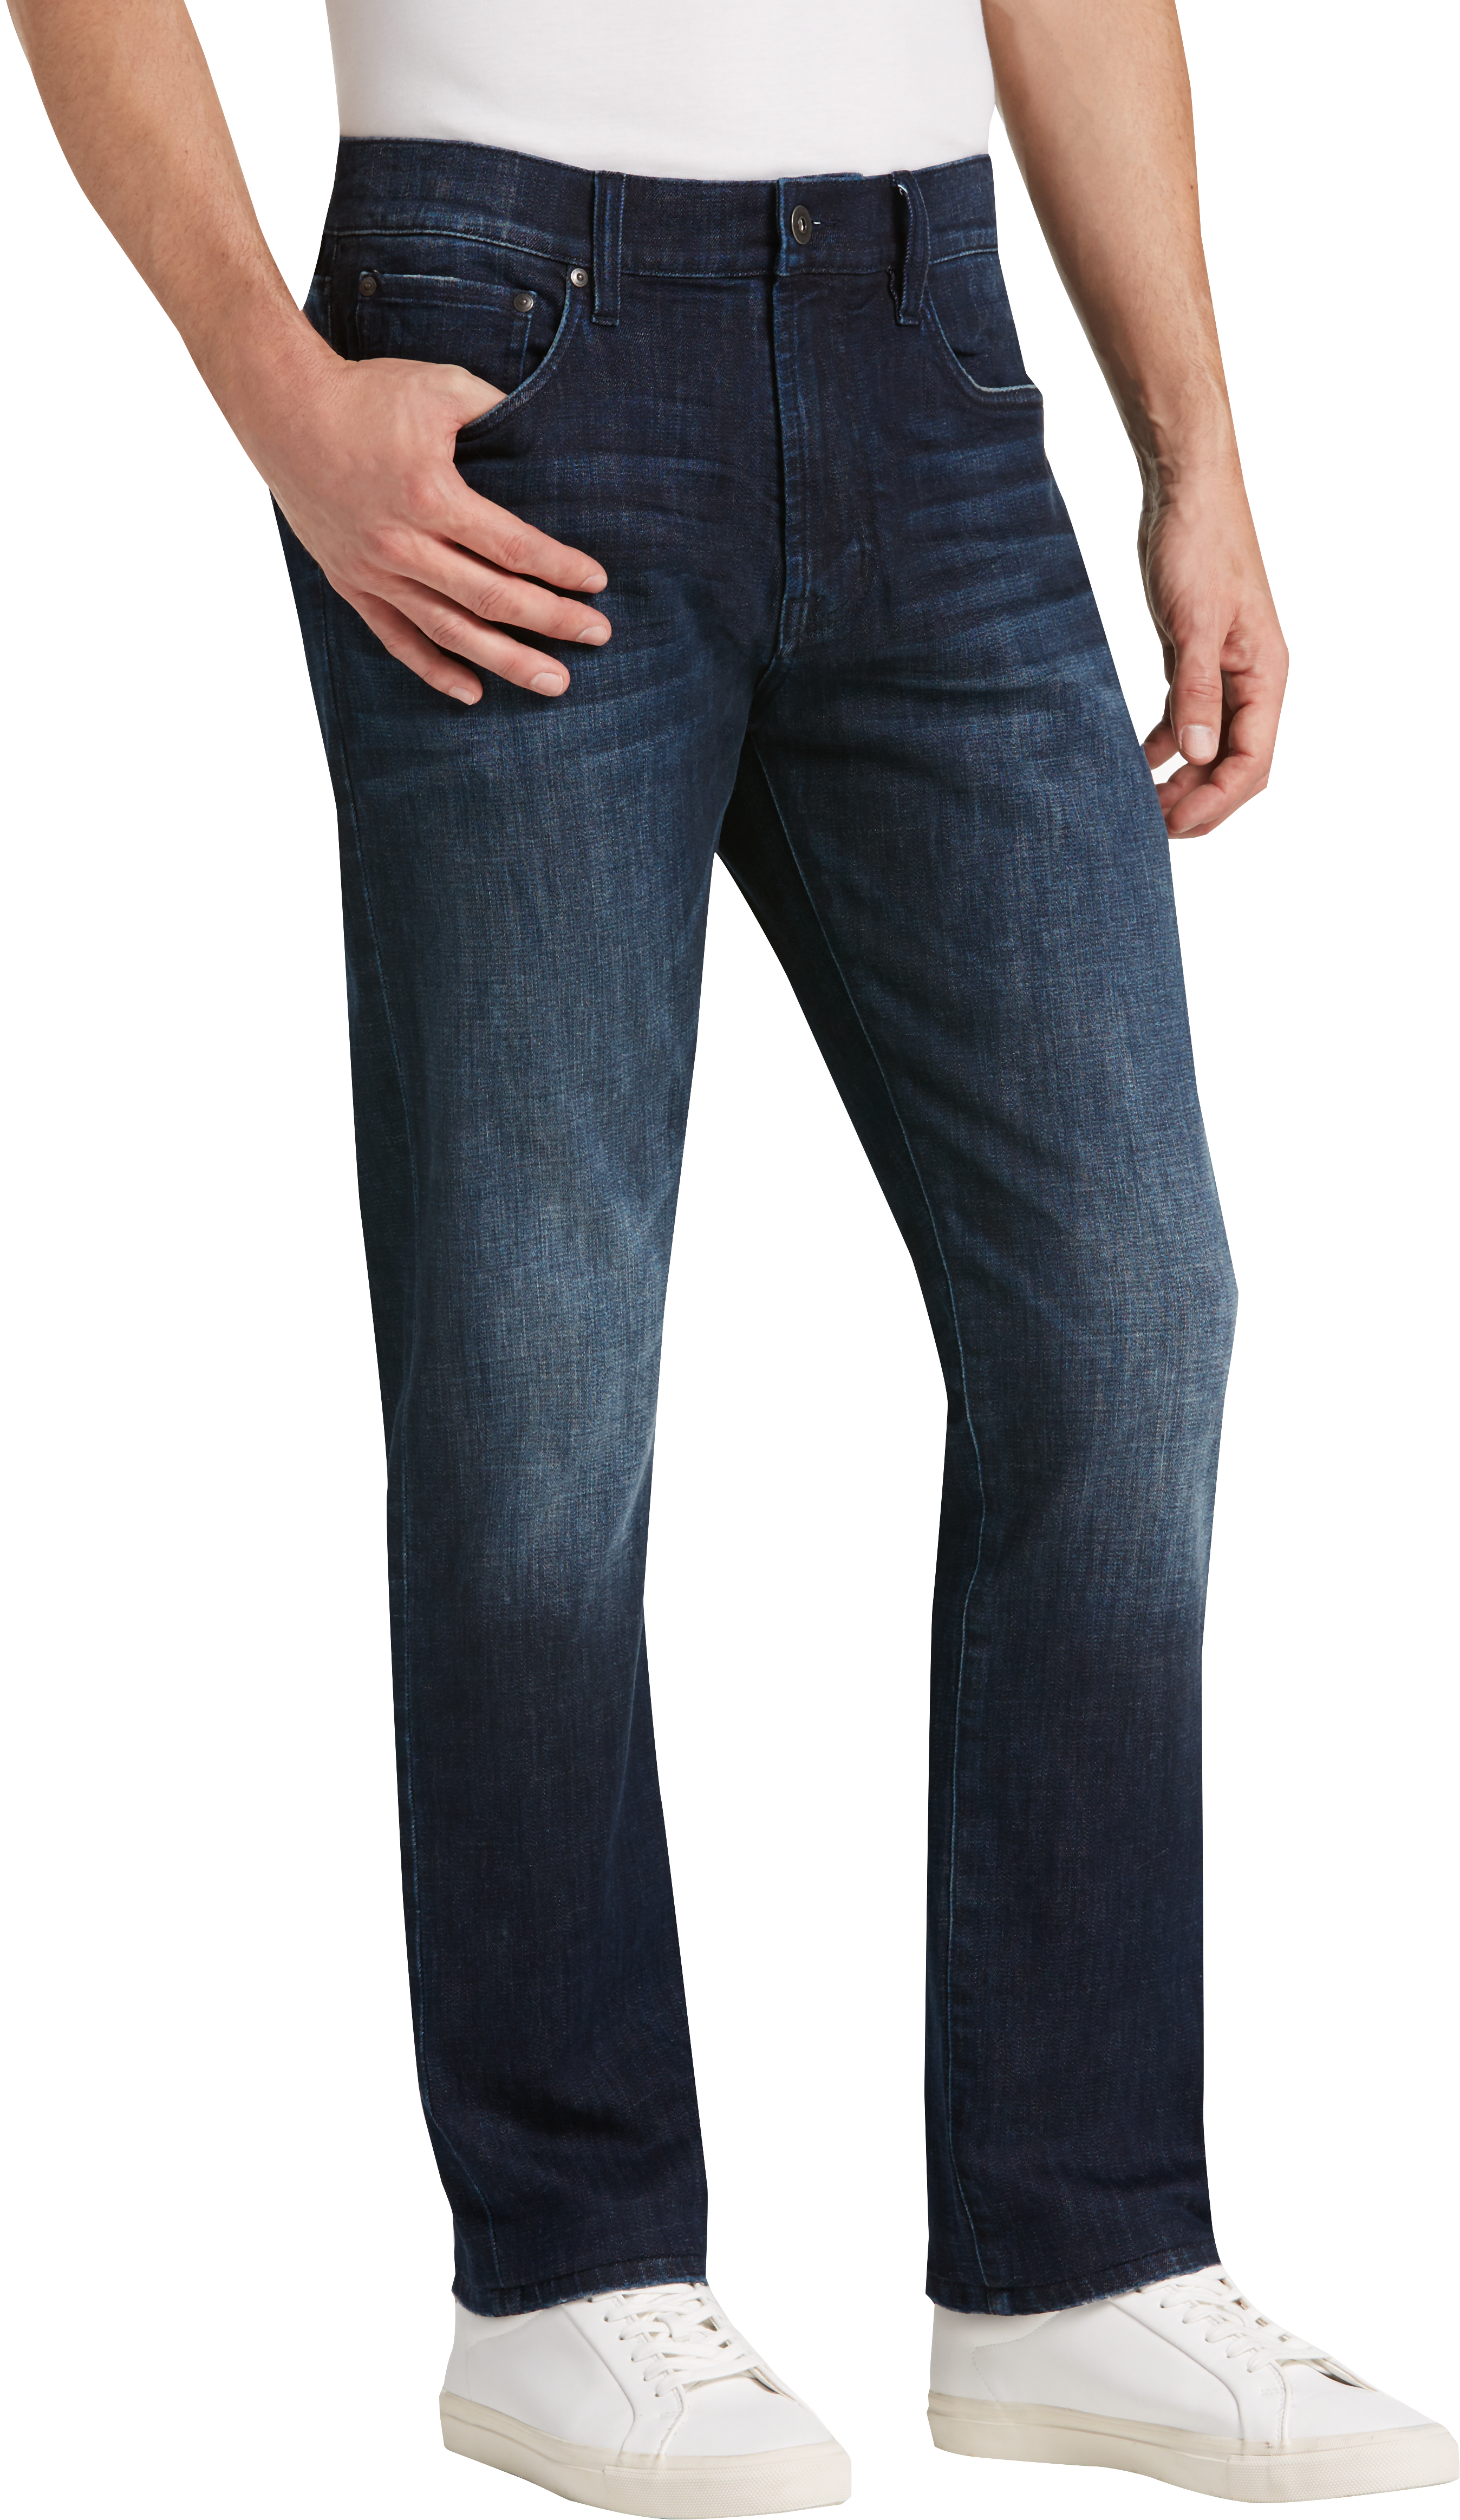 Joseph Abboud Dark Coal Blue Wash Slim Fit Jeans - Men's Pants | Men's ...